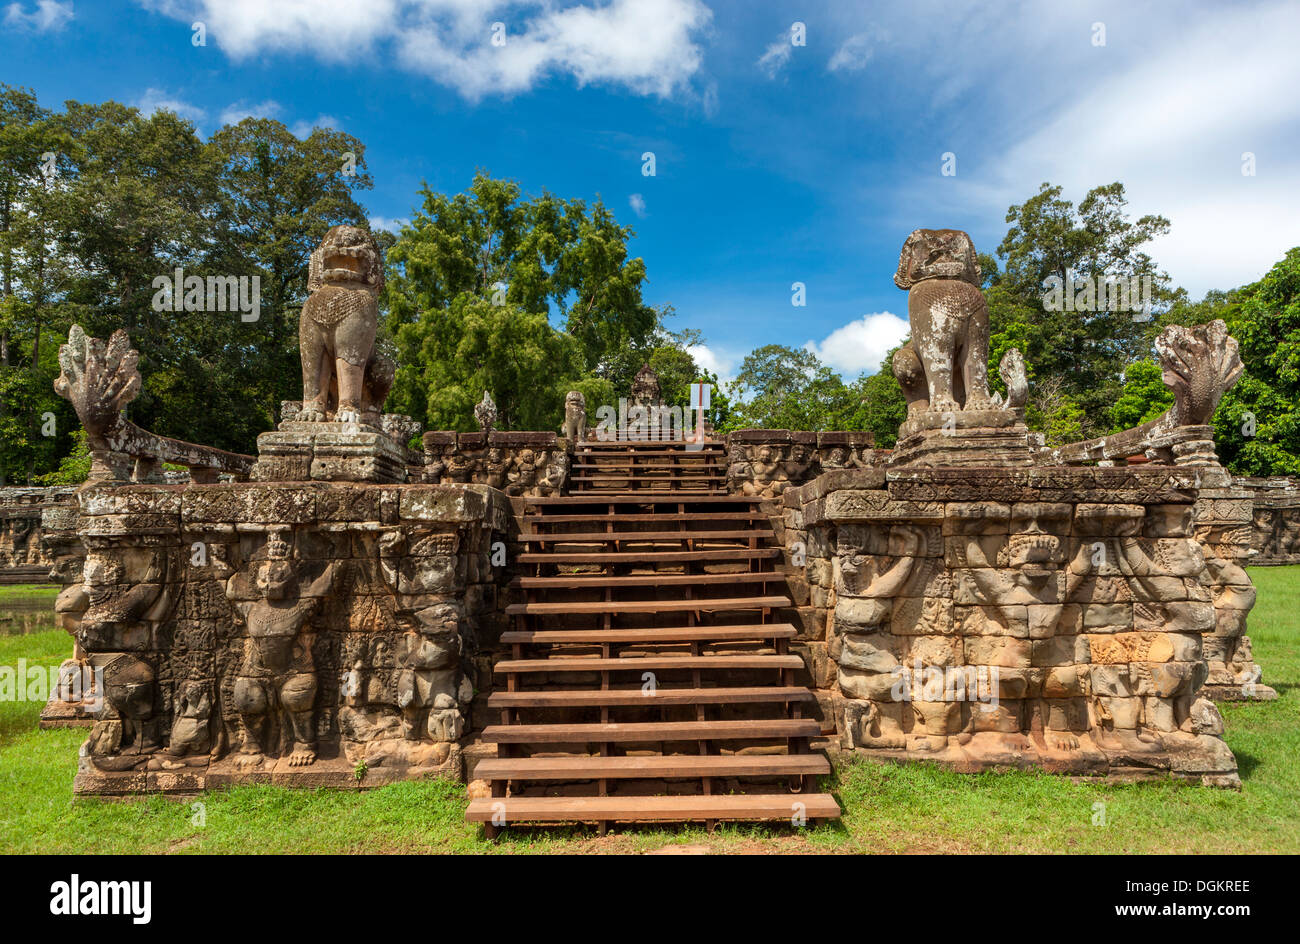 Elephants Terrace of Royal Palace at Angkor Thom. Stock Photo